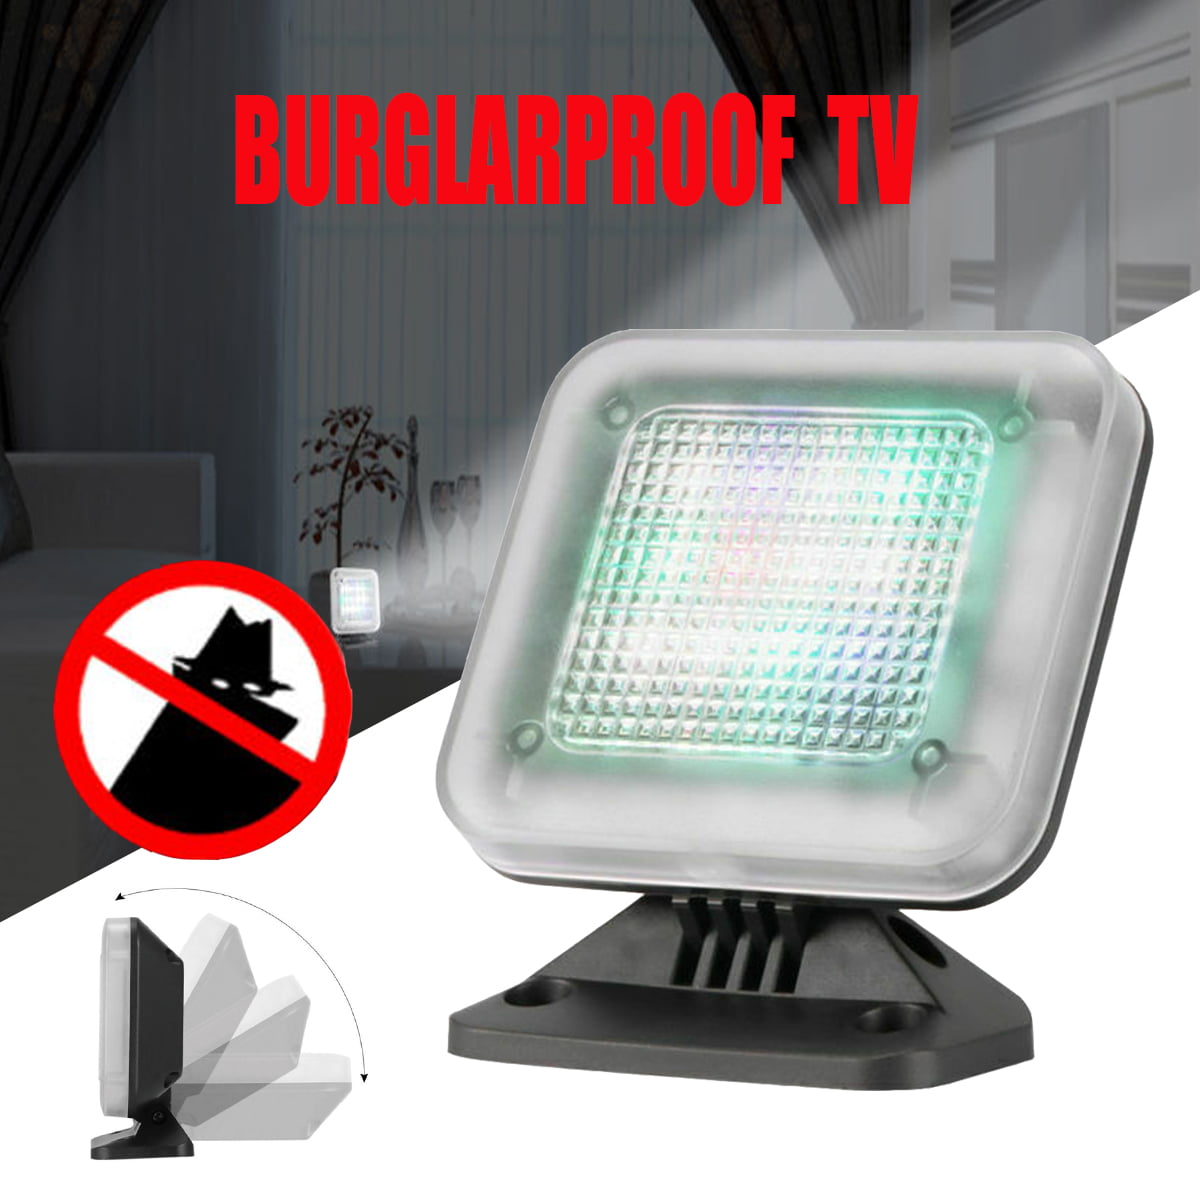 EVTSCAN LED TV Light Simulator LED Light Dummy Fake Home Security TV Anti-Thief Burglar Intruder TV Light US Plug 100-240V